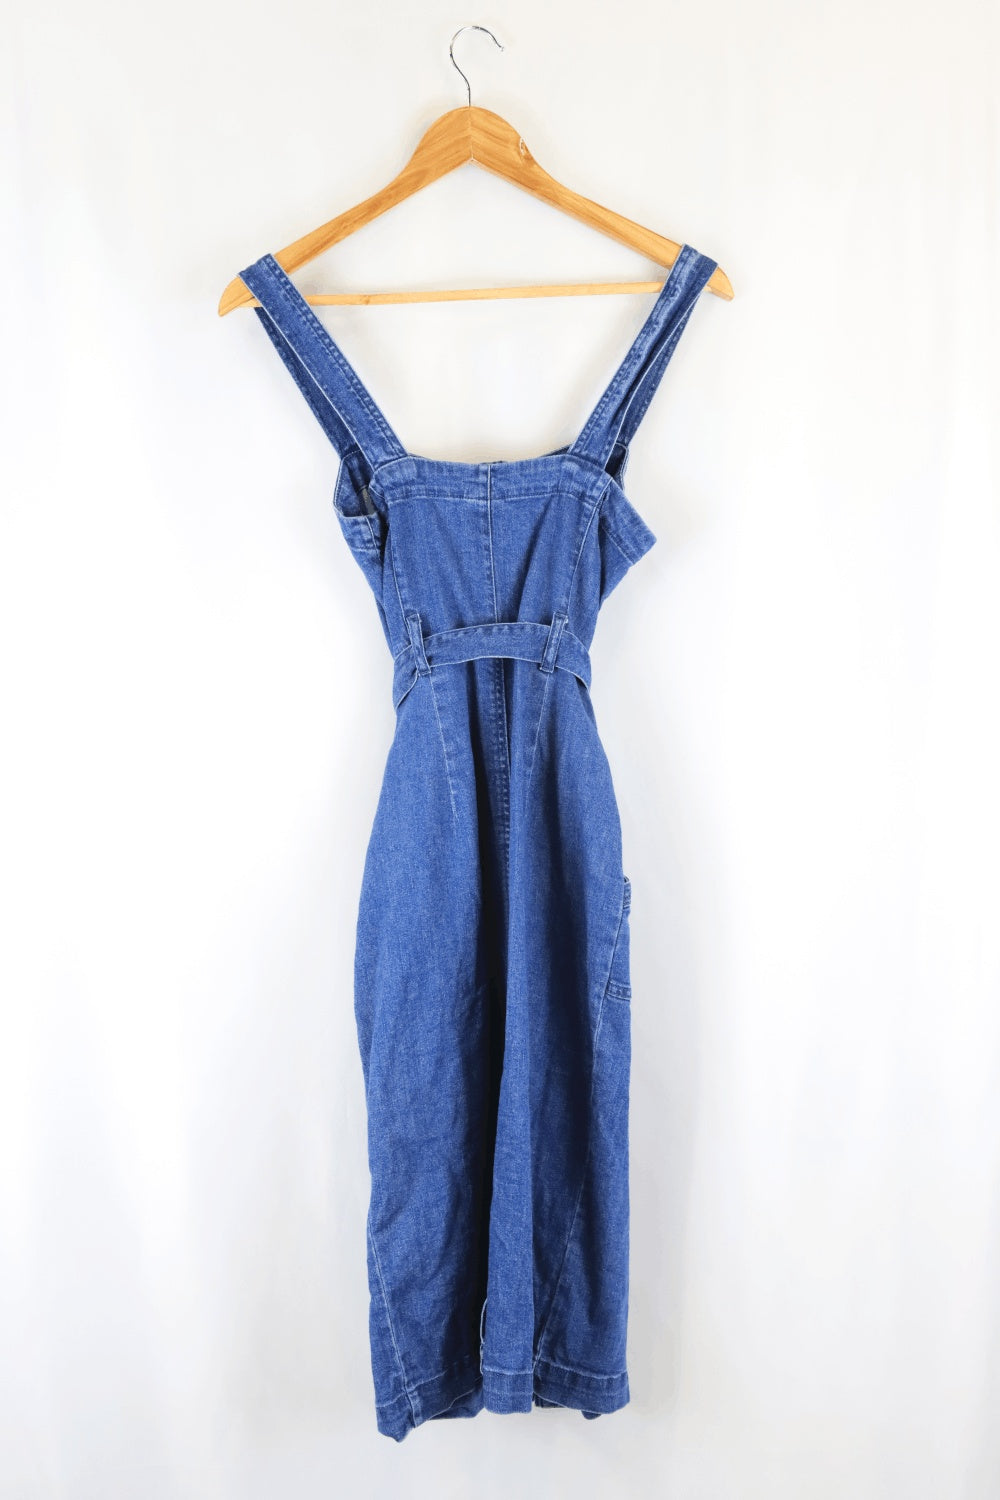 Vero Moda Blue Denim Dress S